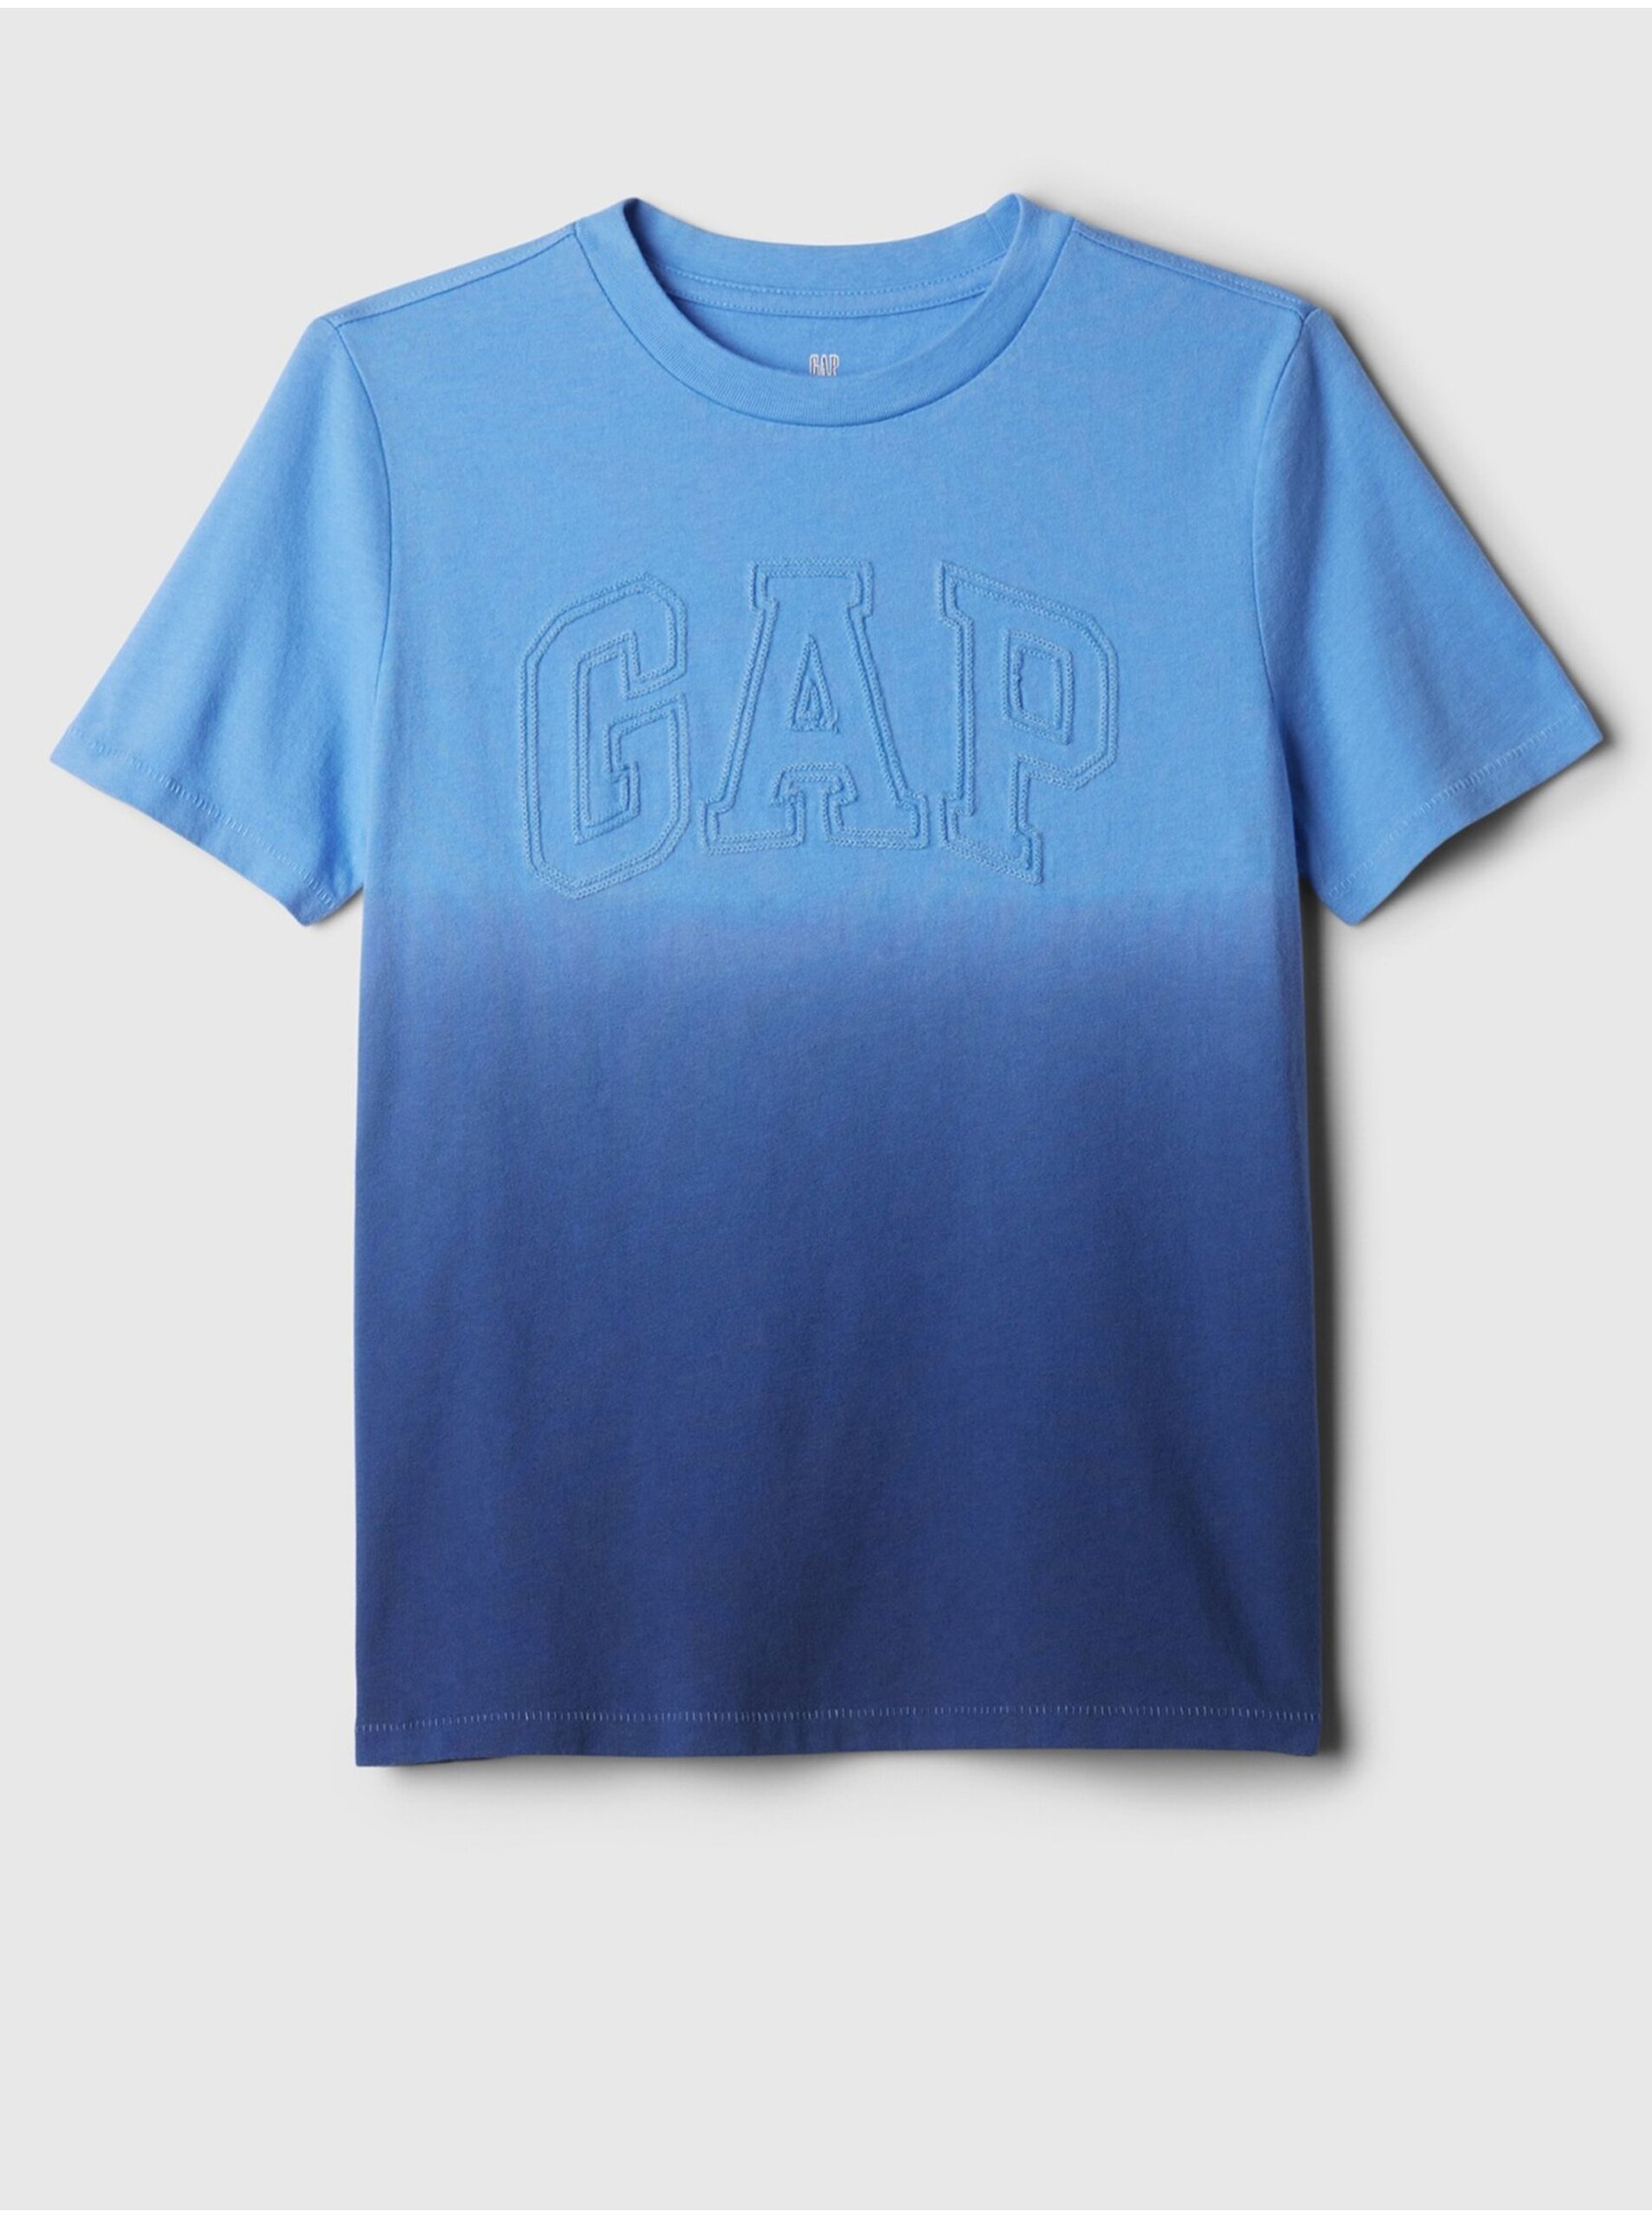 Lacno Modré chlapčenské tričko GAP